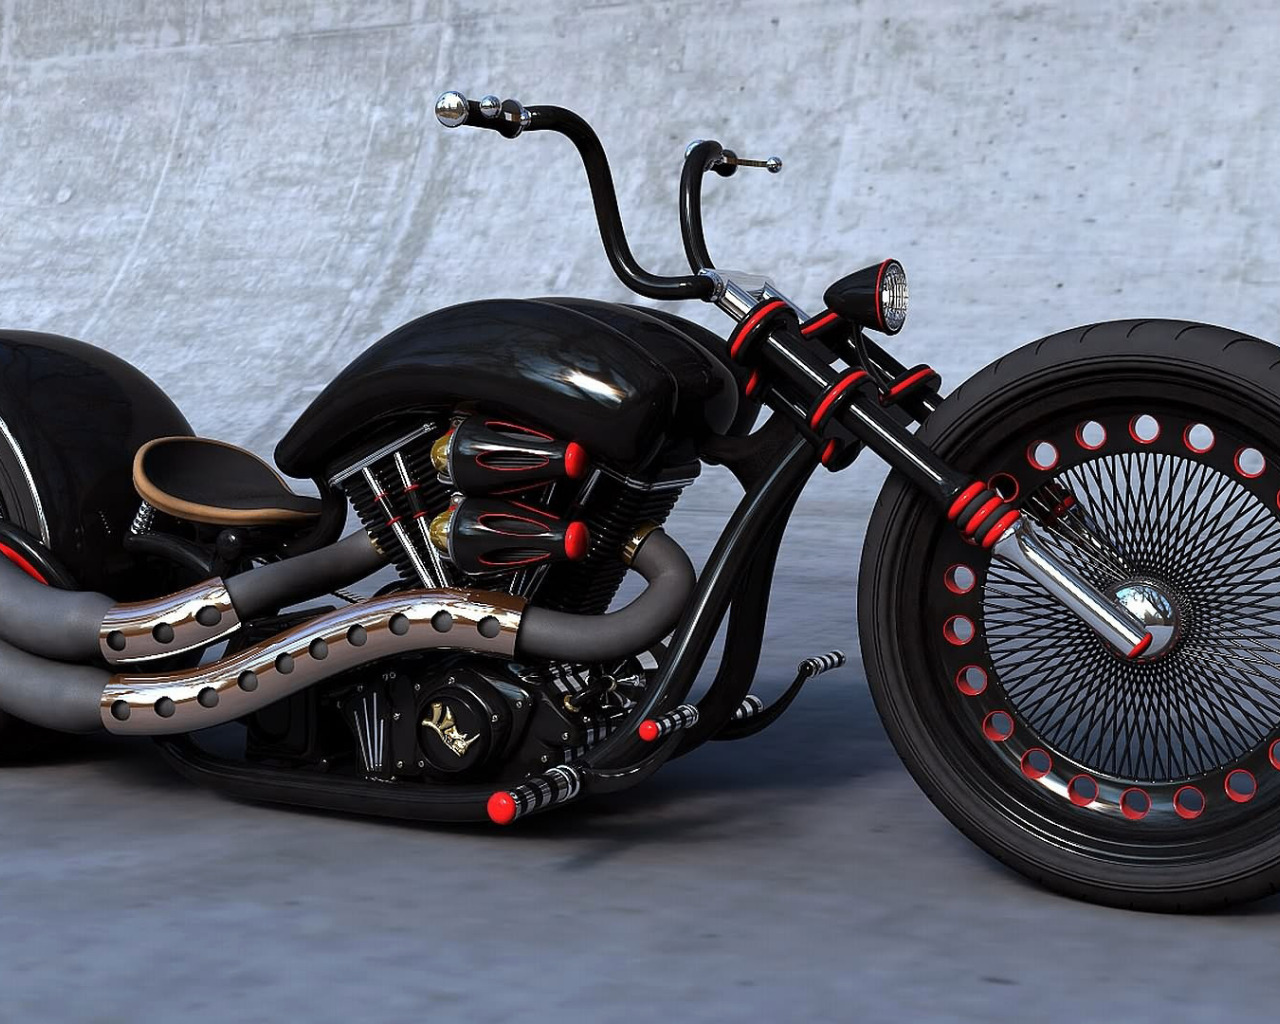 Удлиненные мотоциклы. Harley Davidson Chopper Wallpaper. Harley Davidson Motorcycles Skull 3d n bb1. Bolt мотоцикл какой Харли Дэвидсон похож.